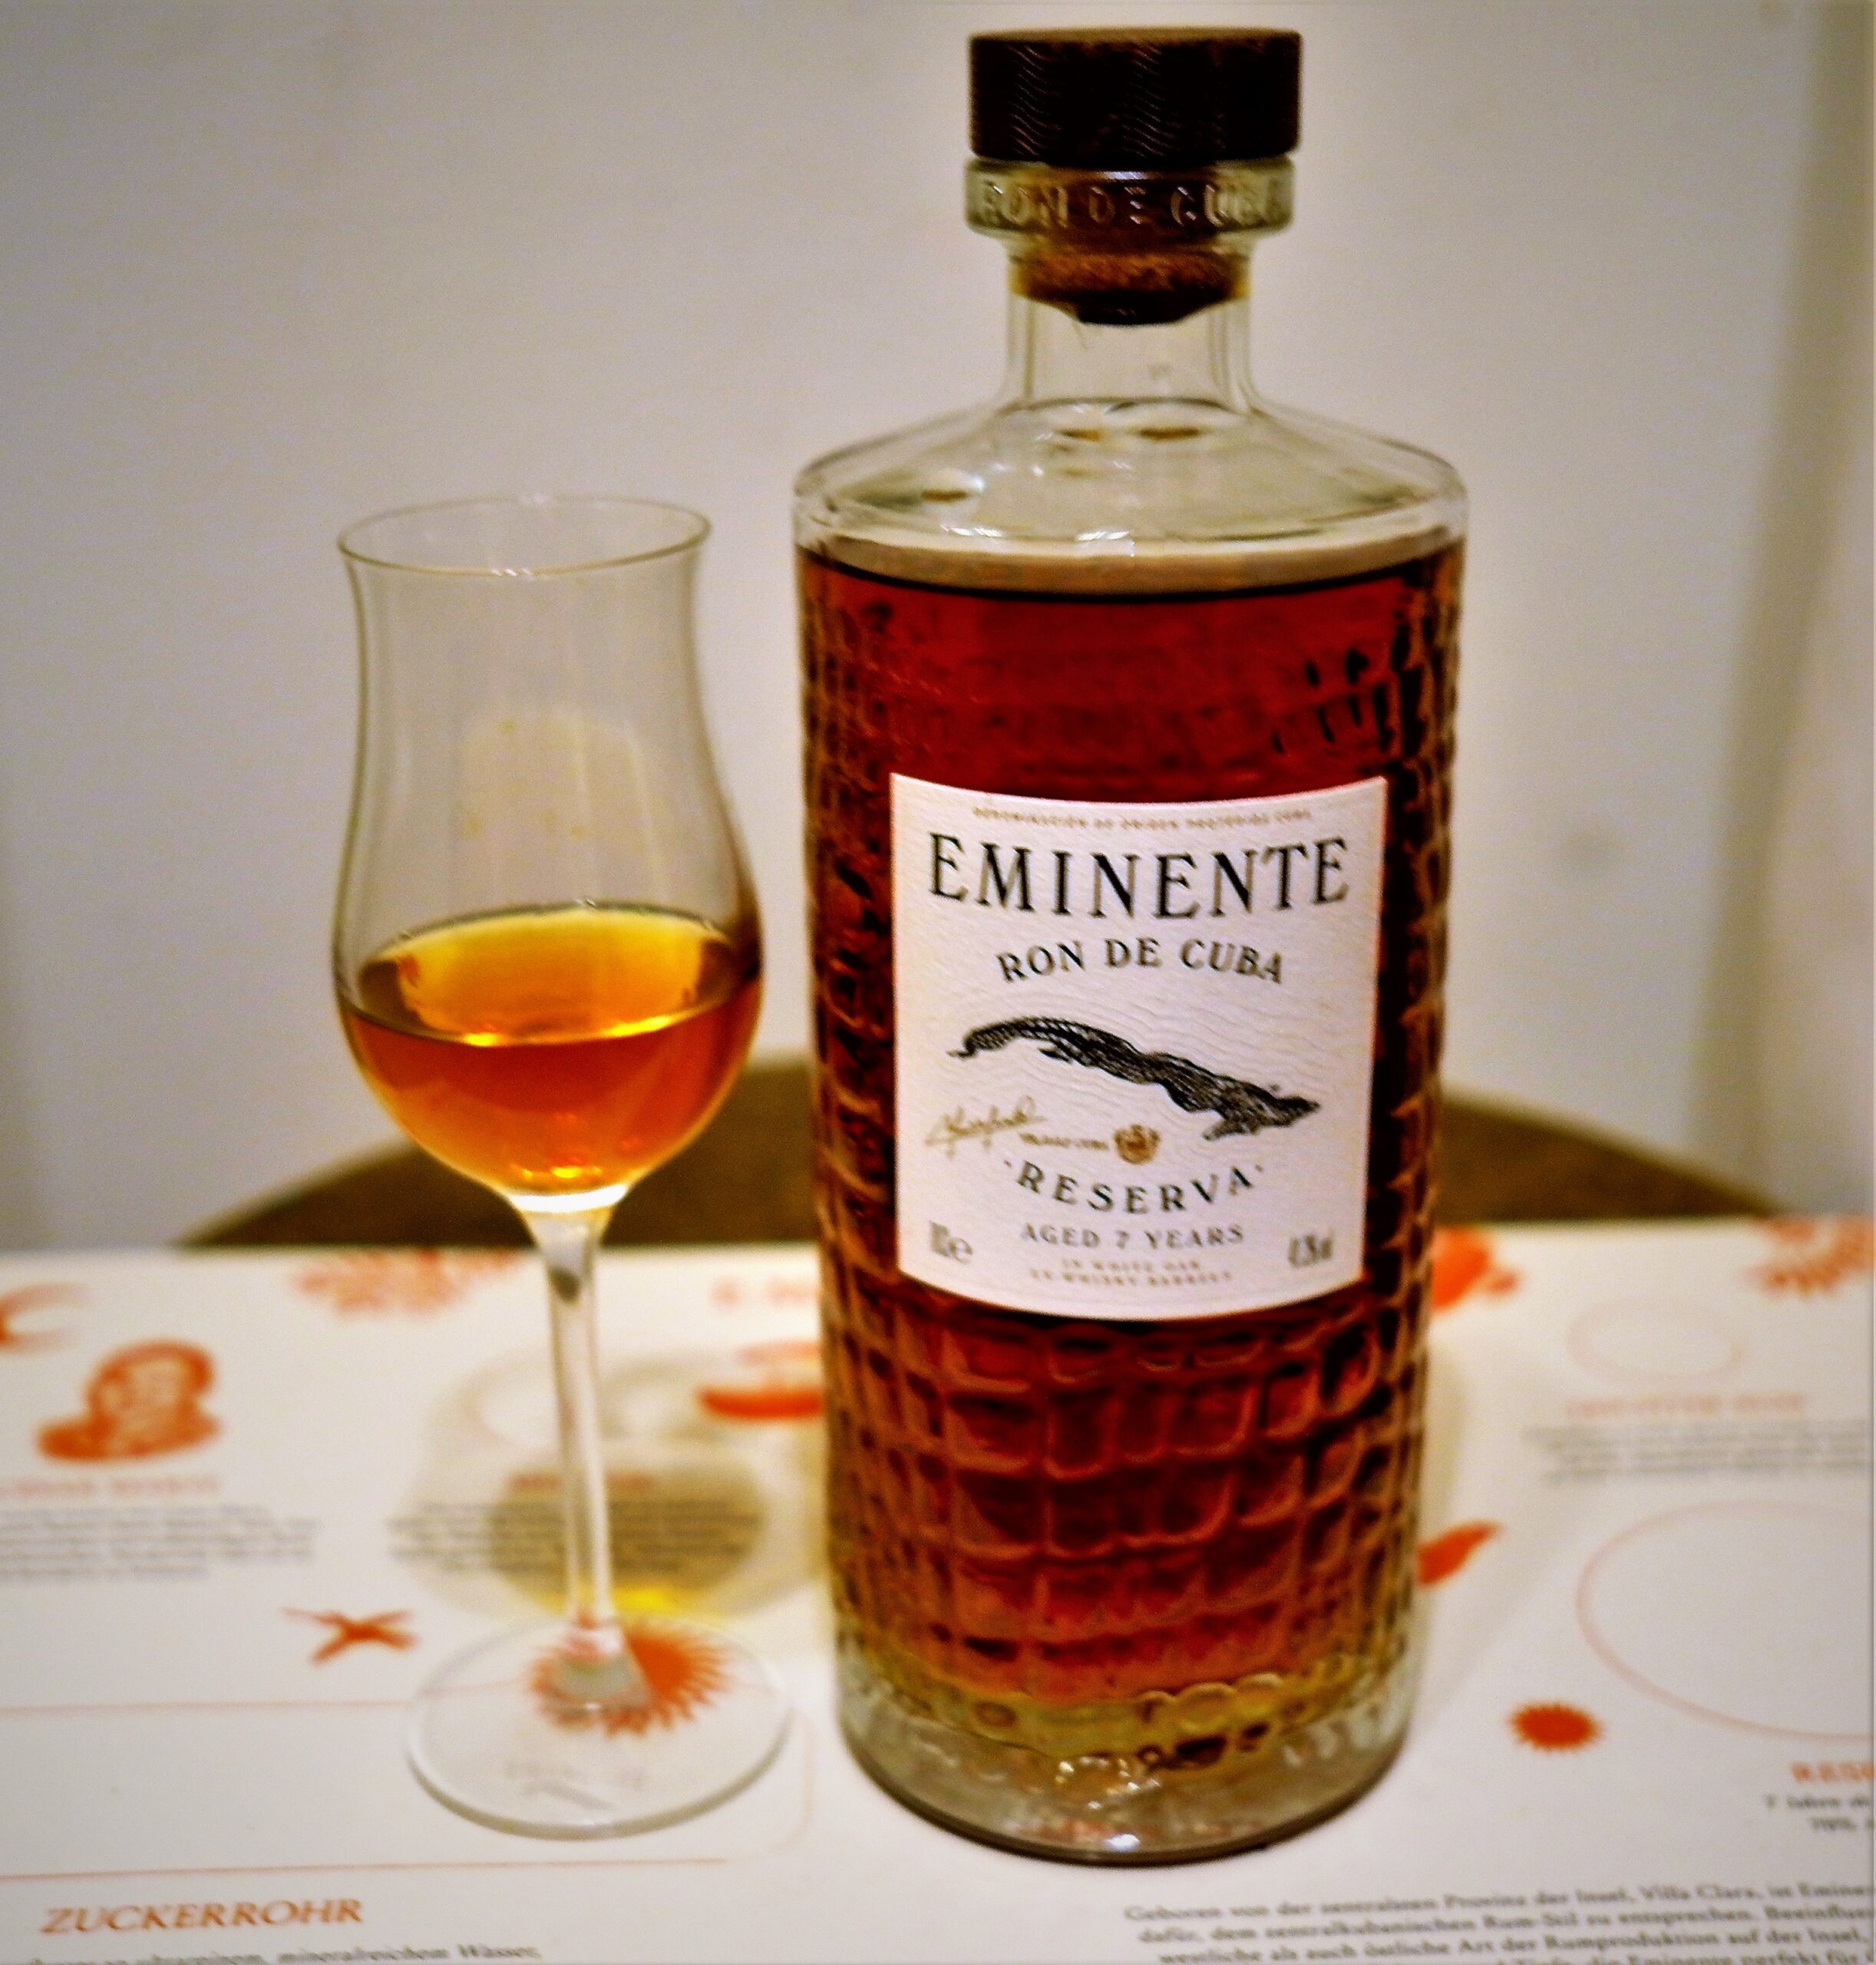 Eminente, Rum Eminente Ambar Claro 3 Years old 0,7L